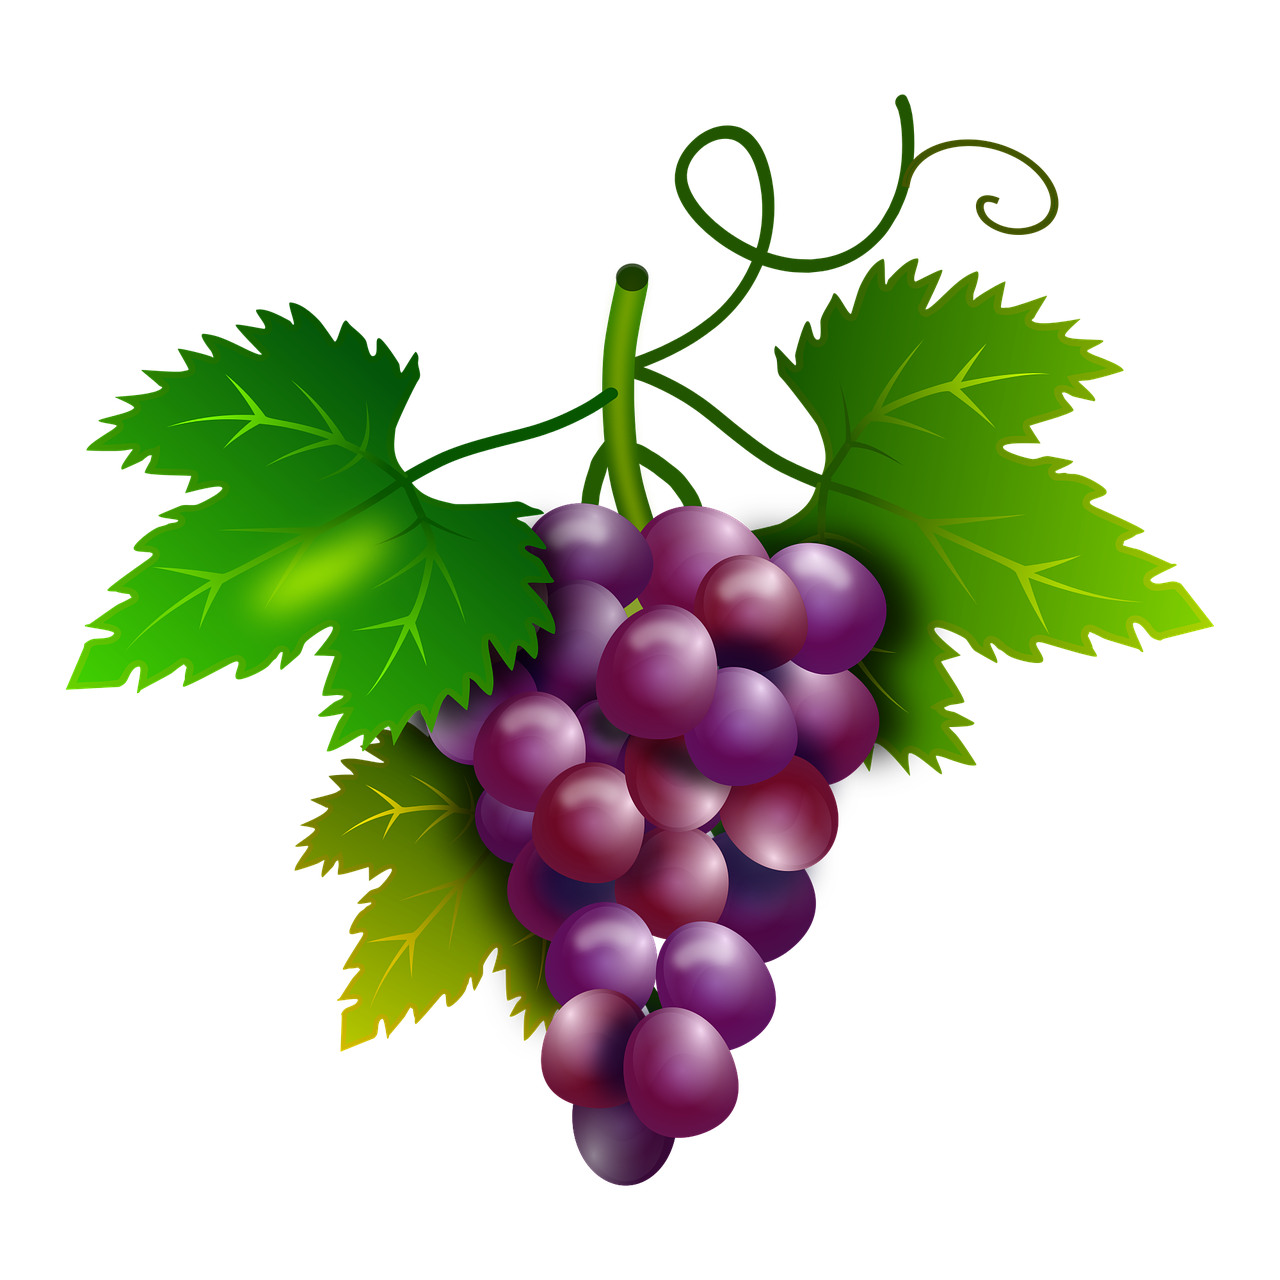 grapes vine vineyard free photo